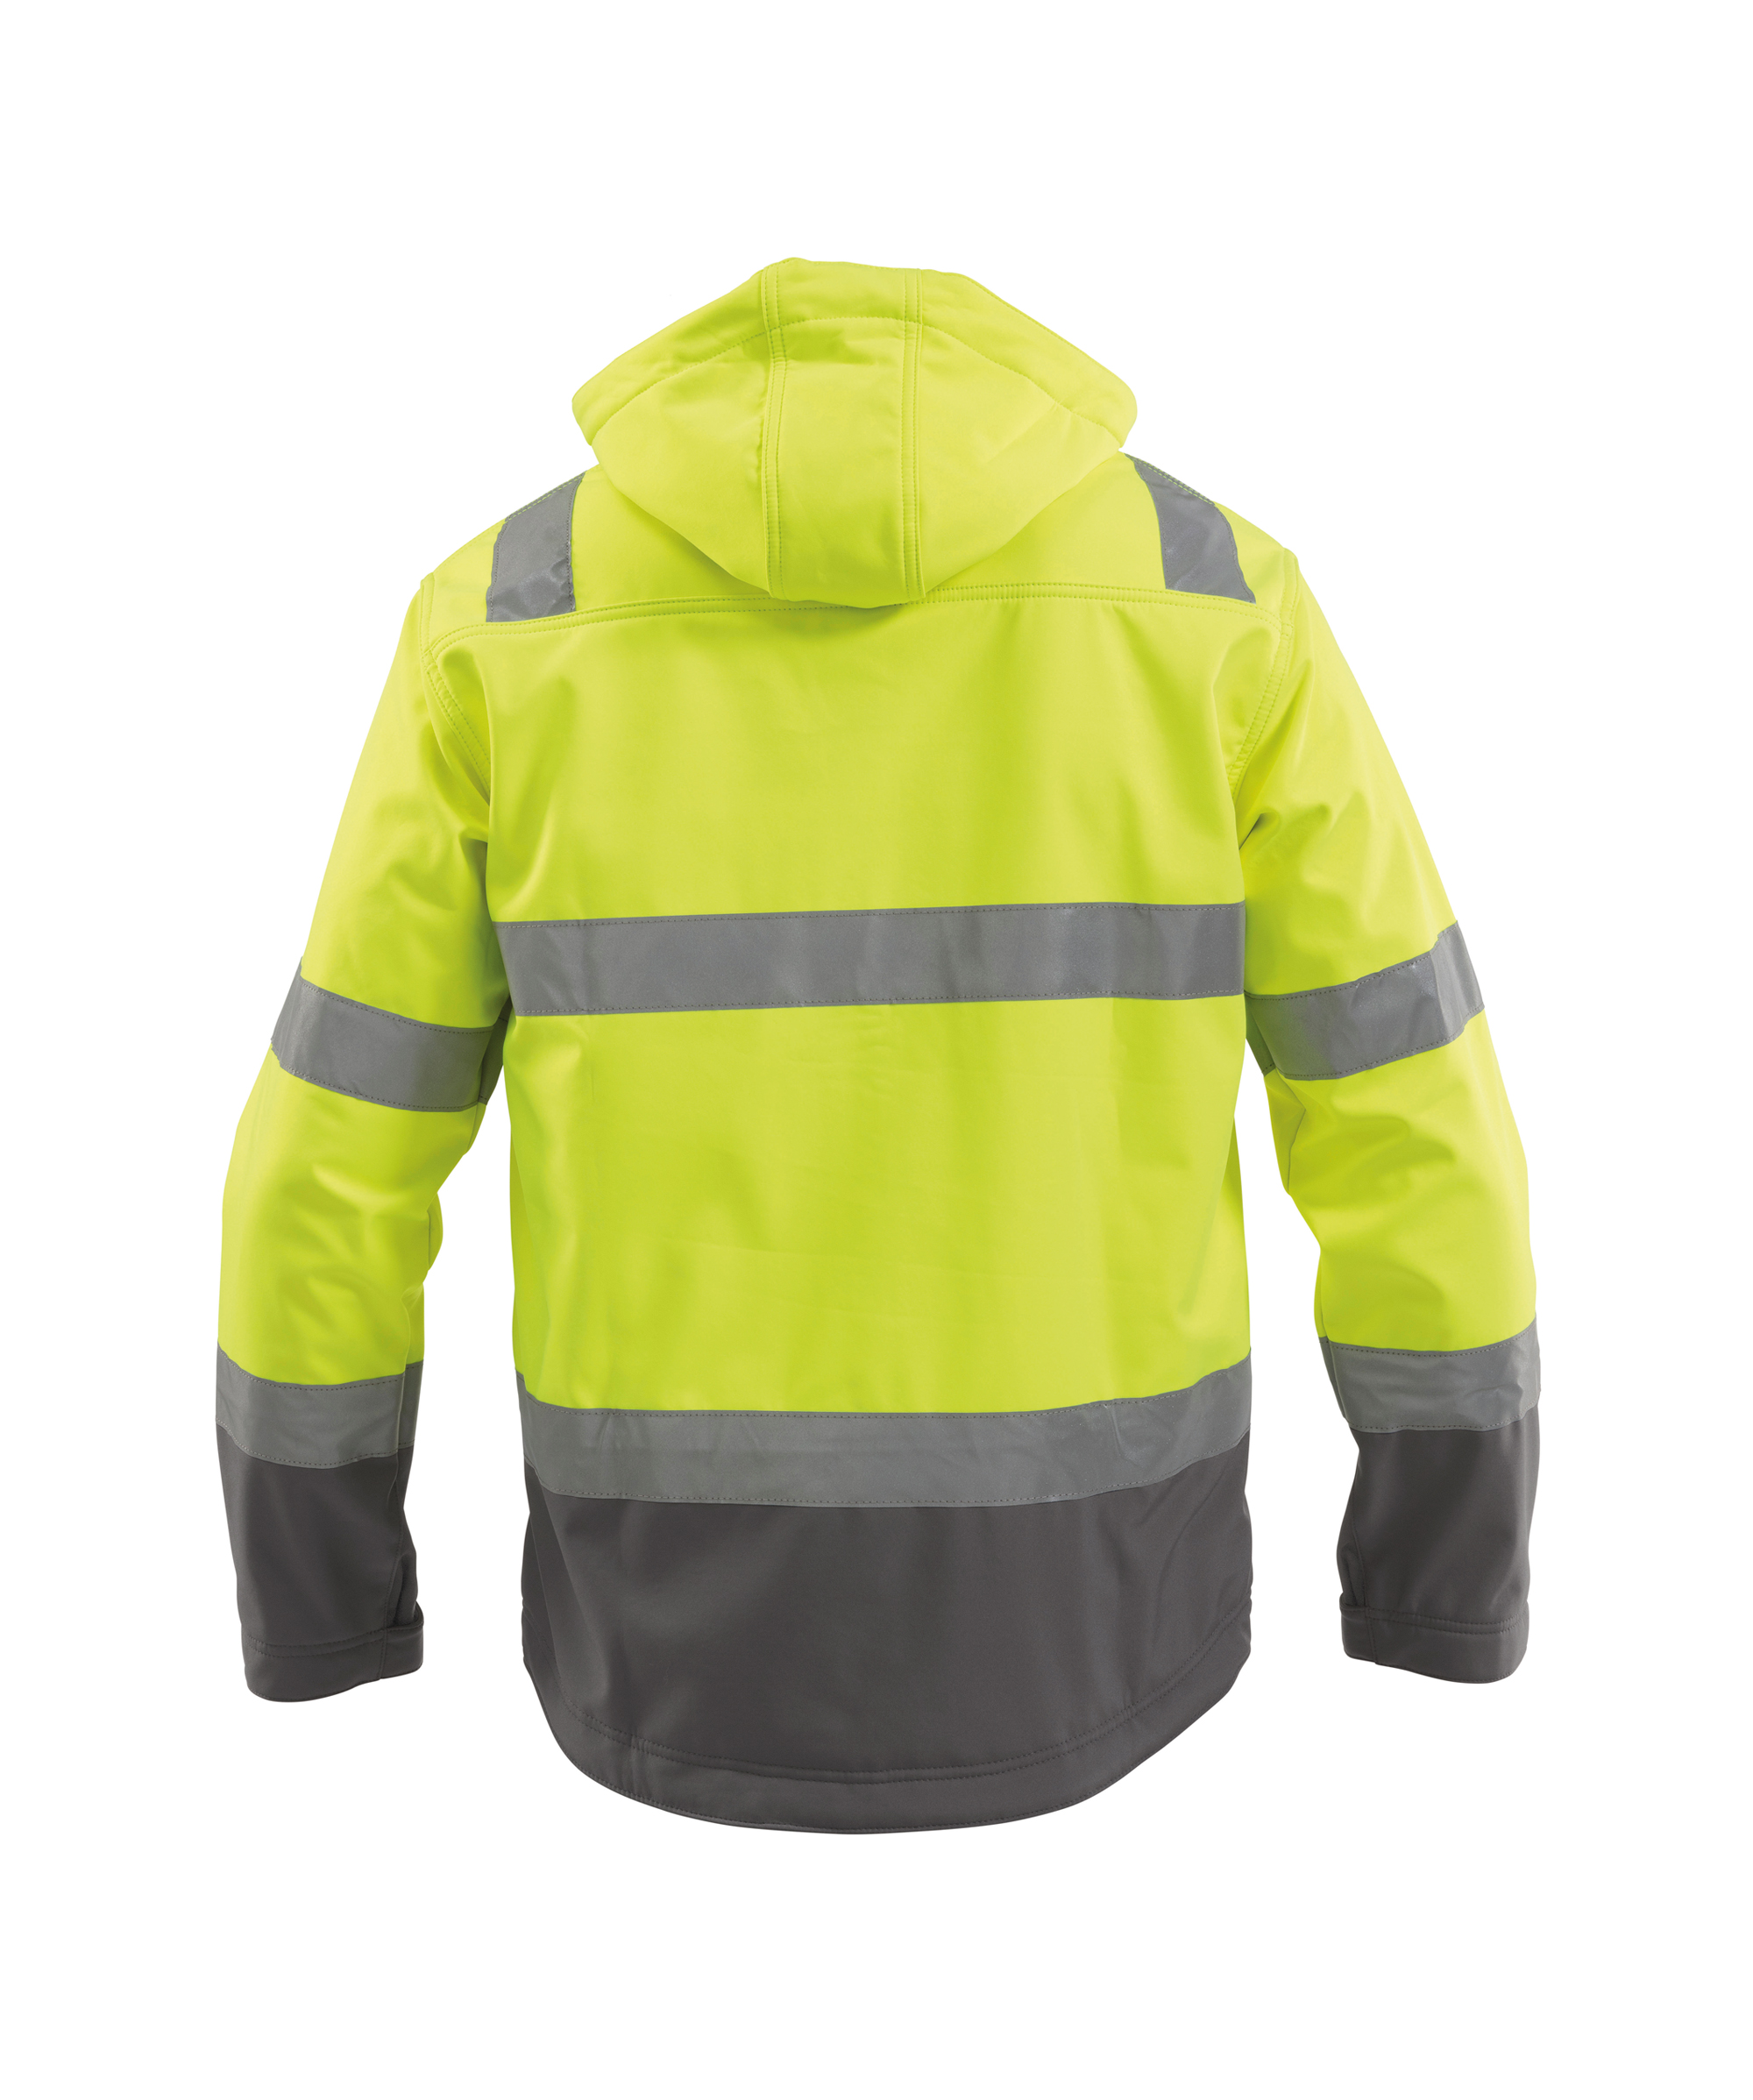 malaga_high-visibility-softshell-work-jacket_fluo-yellow-cement-grey_back.jpg